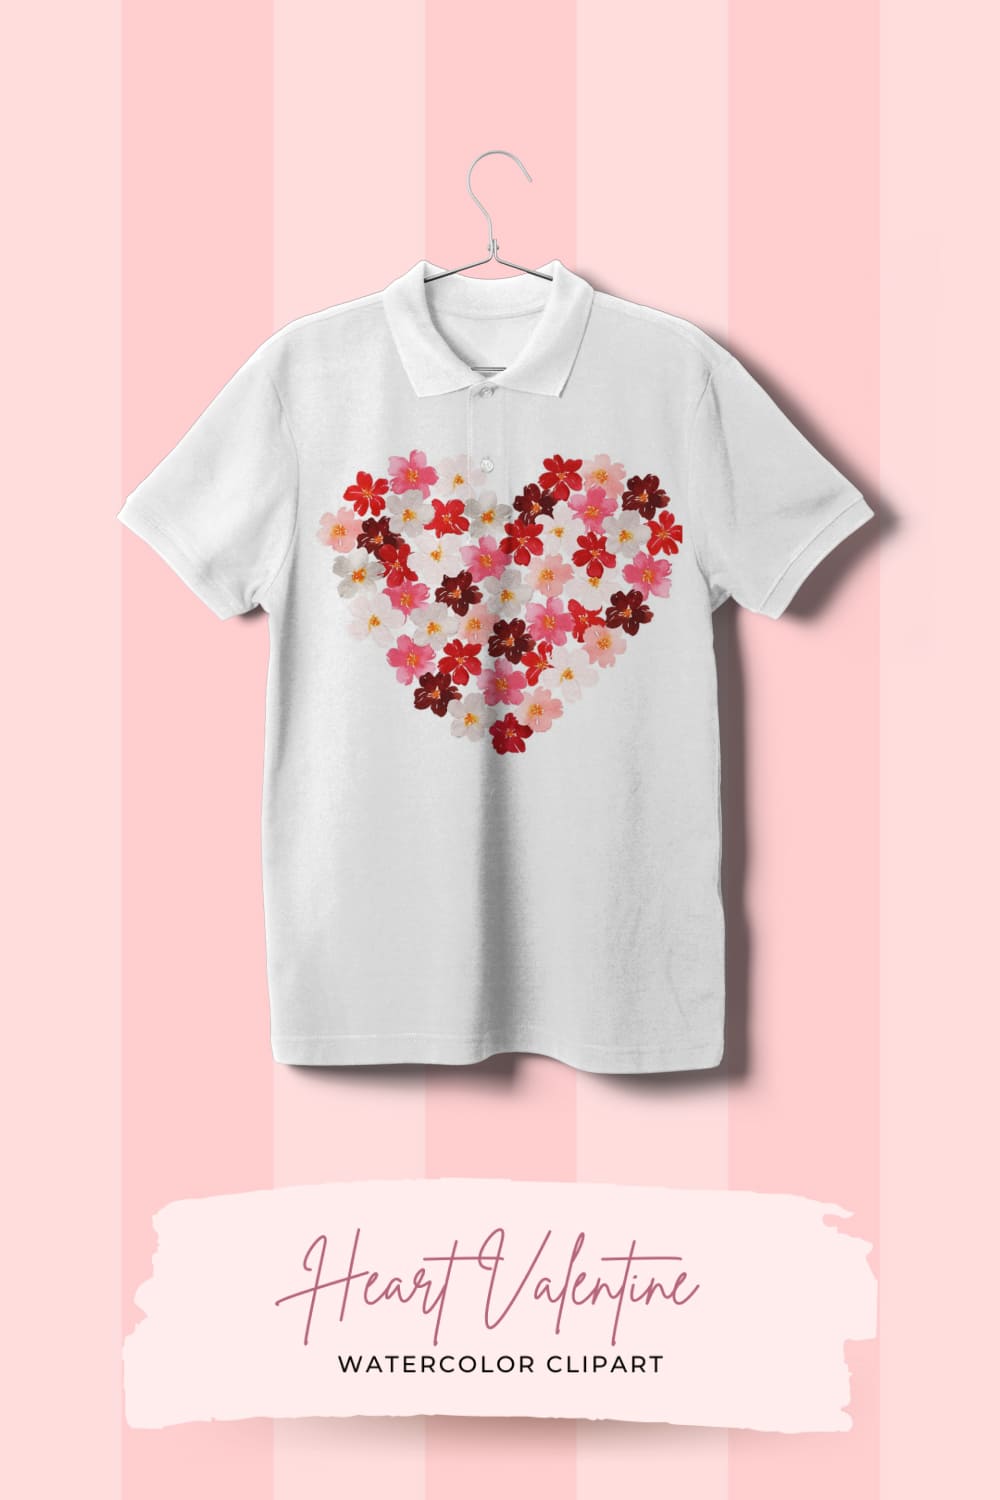 Watercolor Clipart - Heart Valentine - Pinterest.